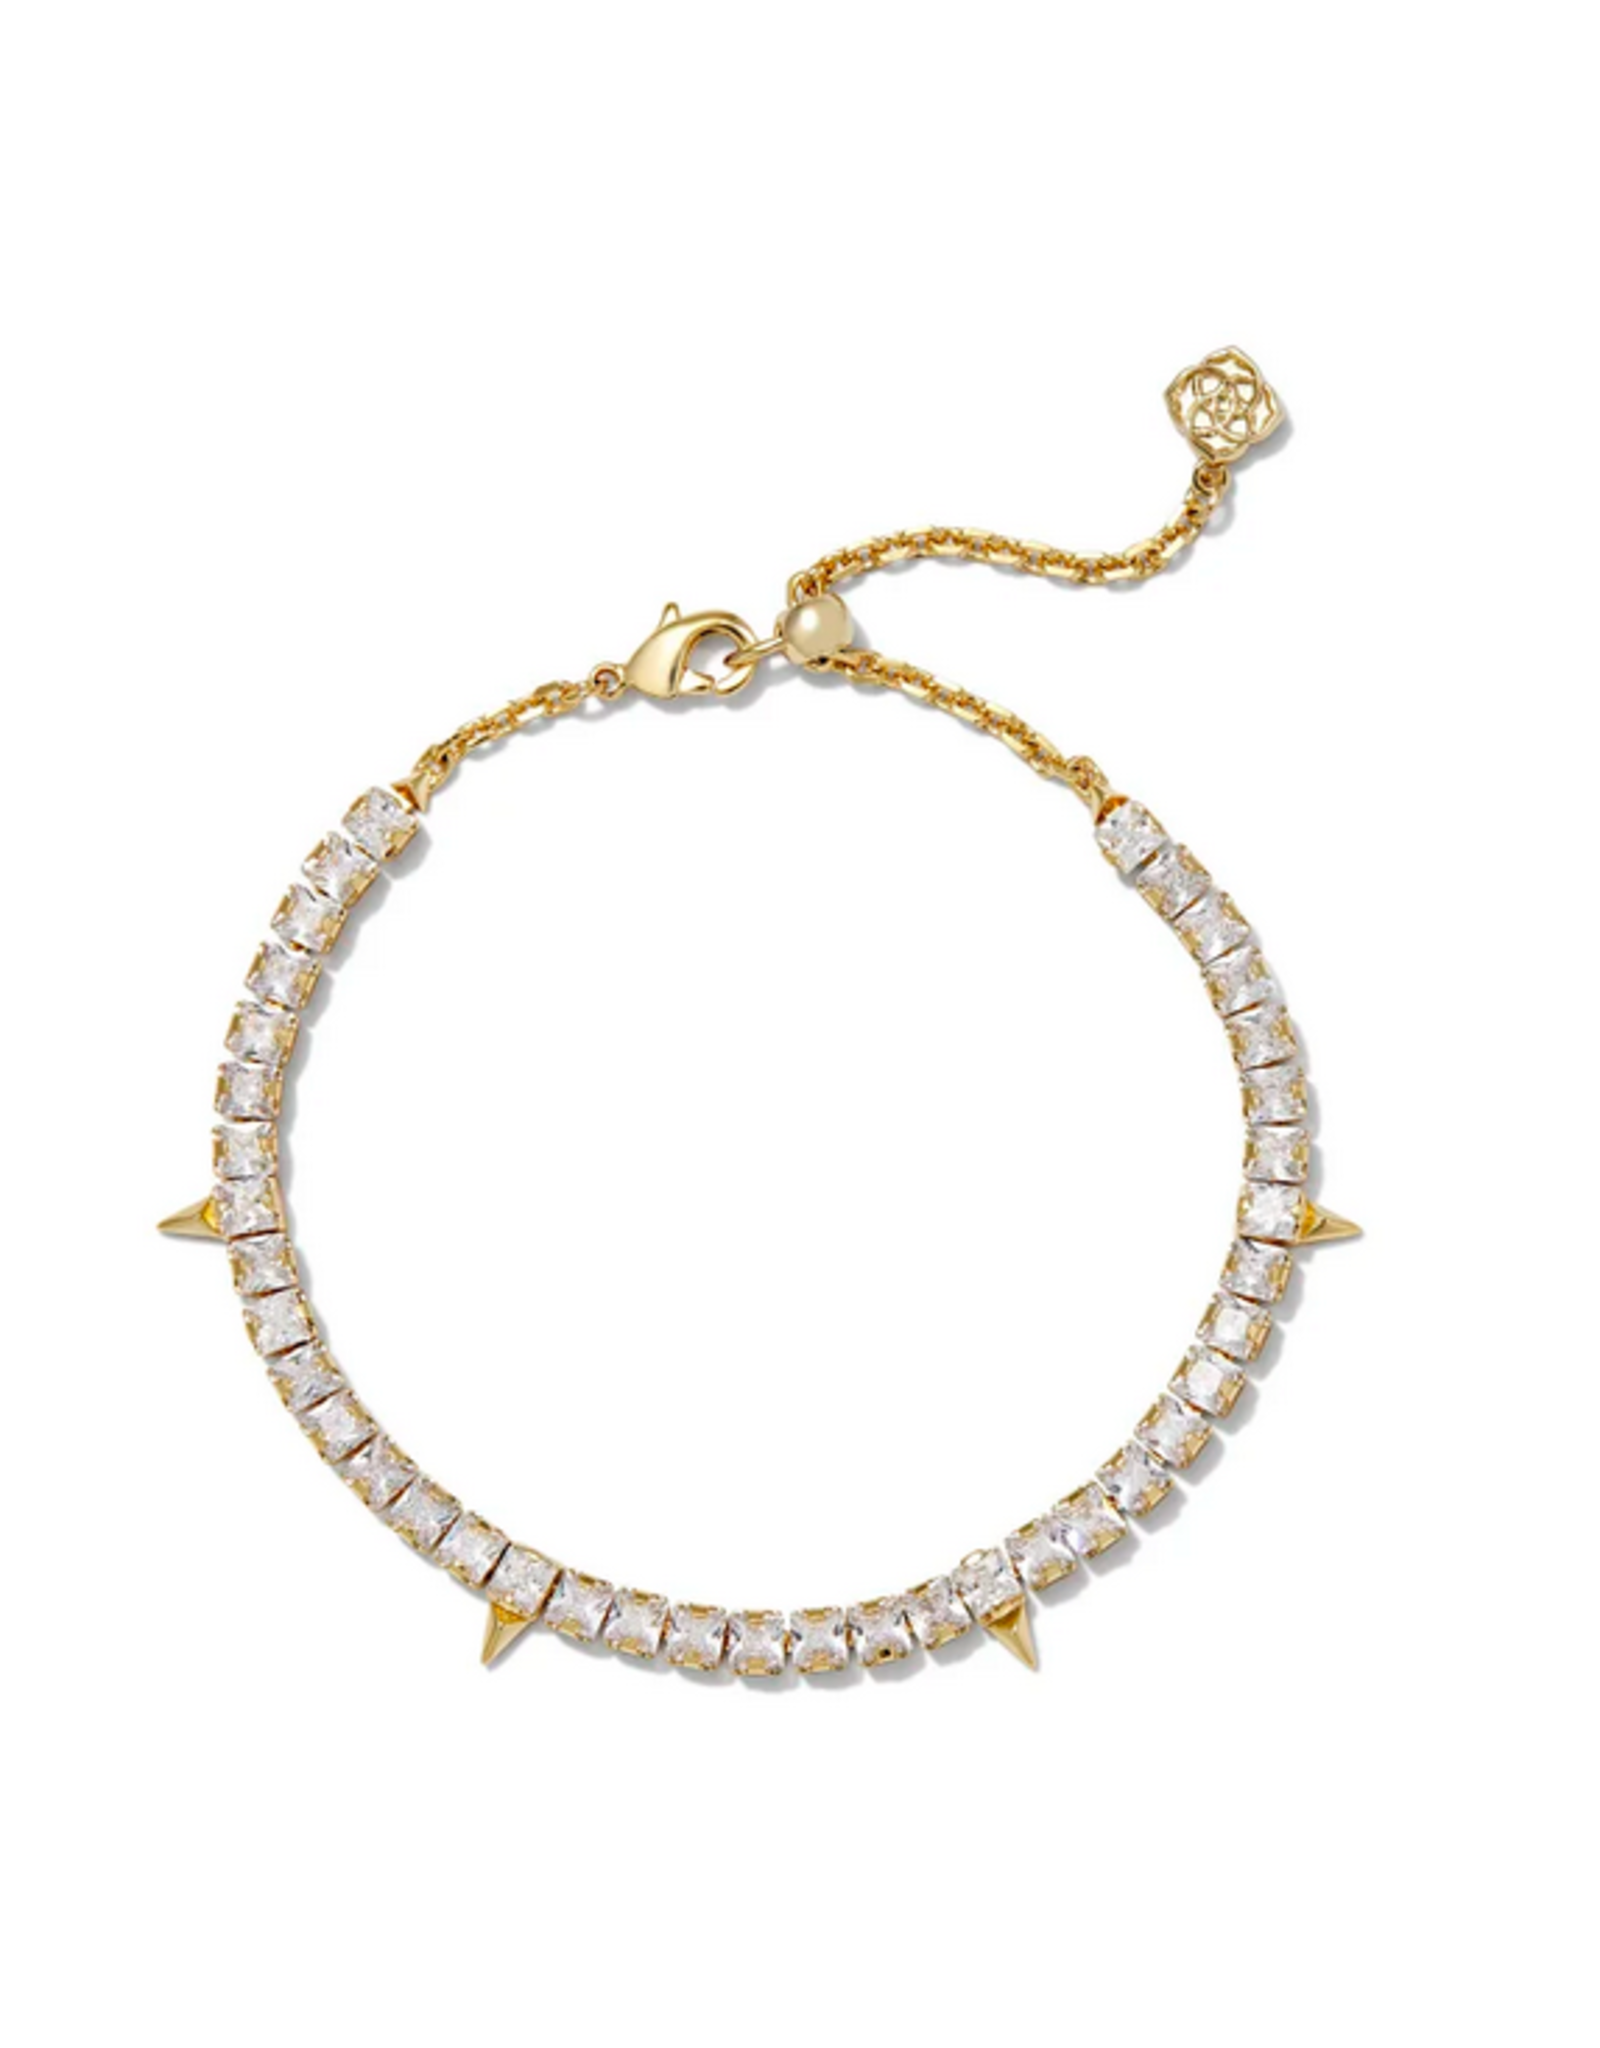 Kendra Scott Jacqueline Tennis Bracelet Gold White Crystal